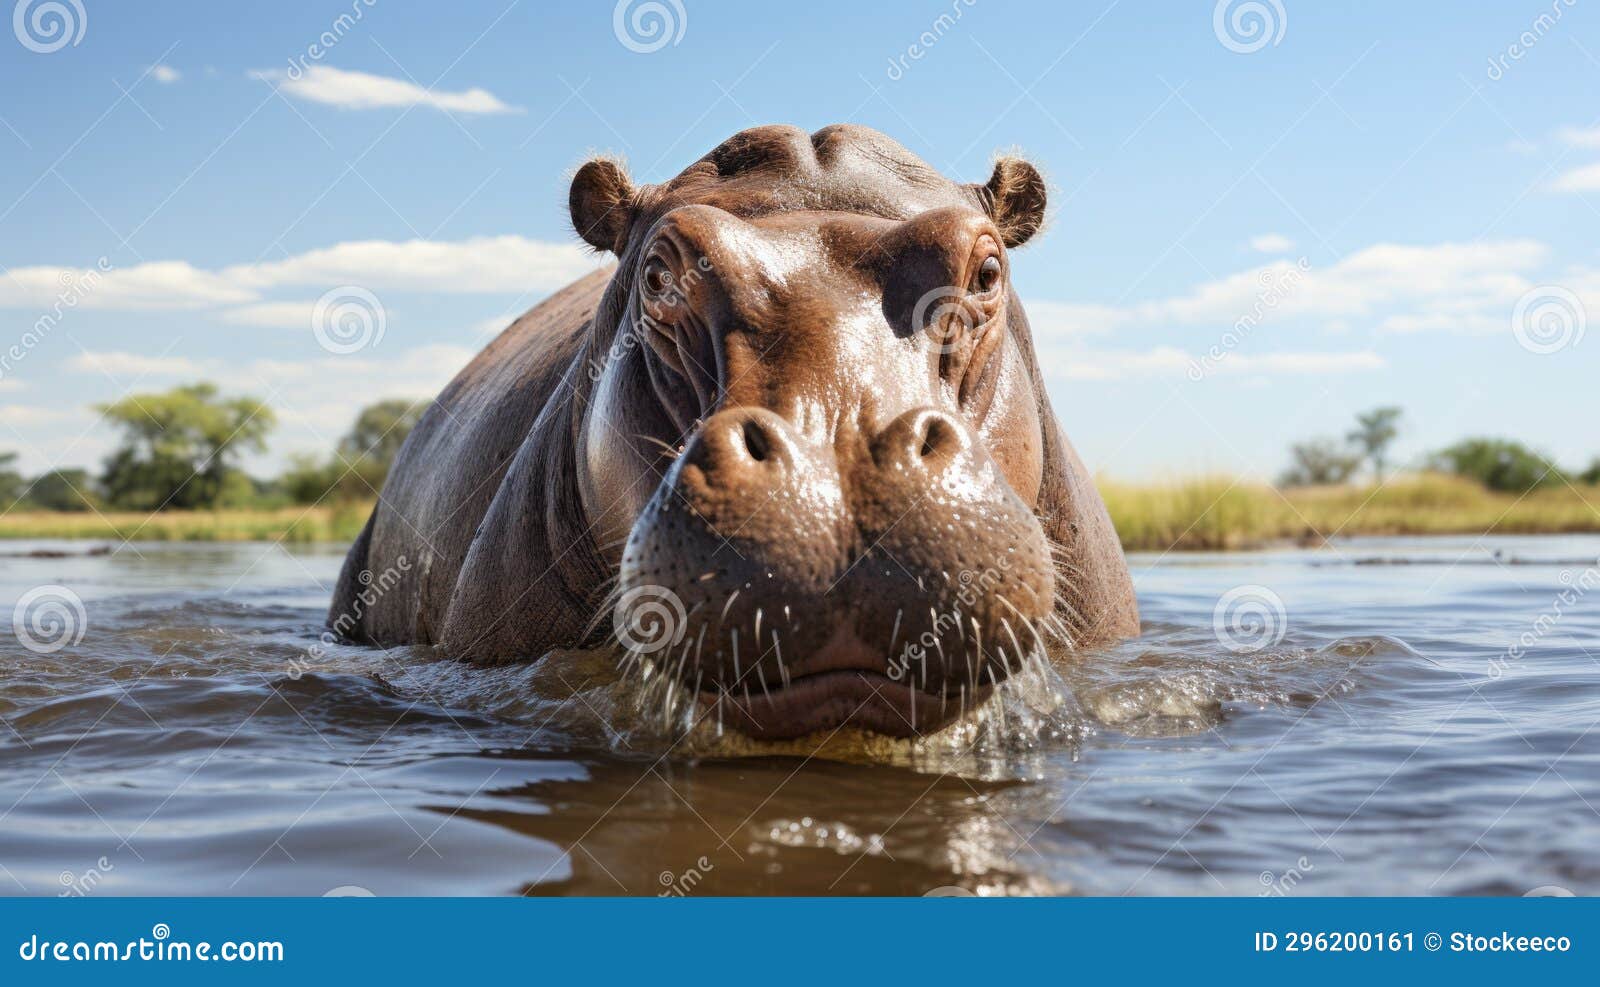 sencillo hippopotamus: a realistic animal portrait in post-processed uhd image